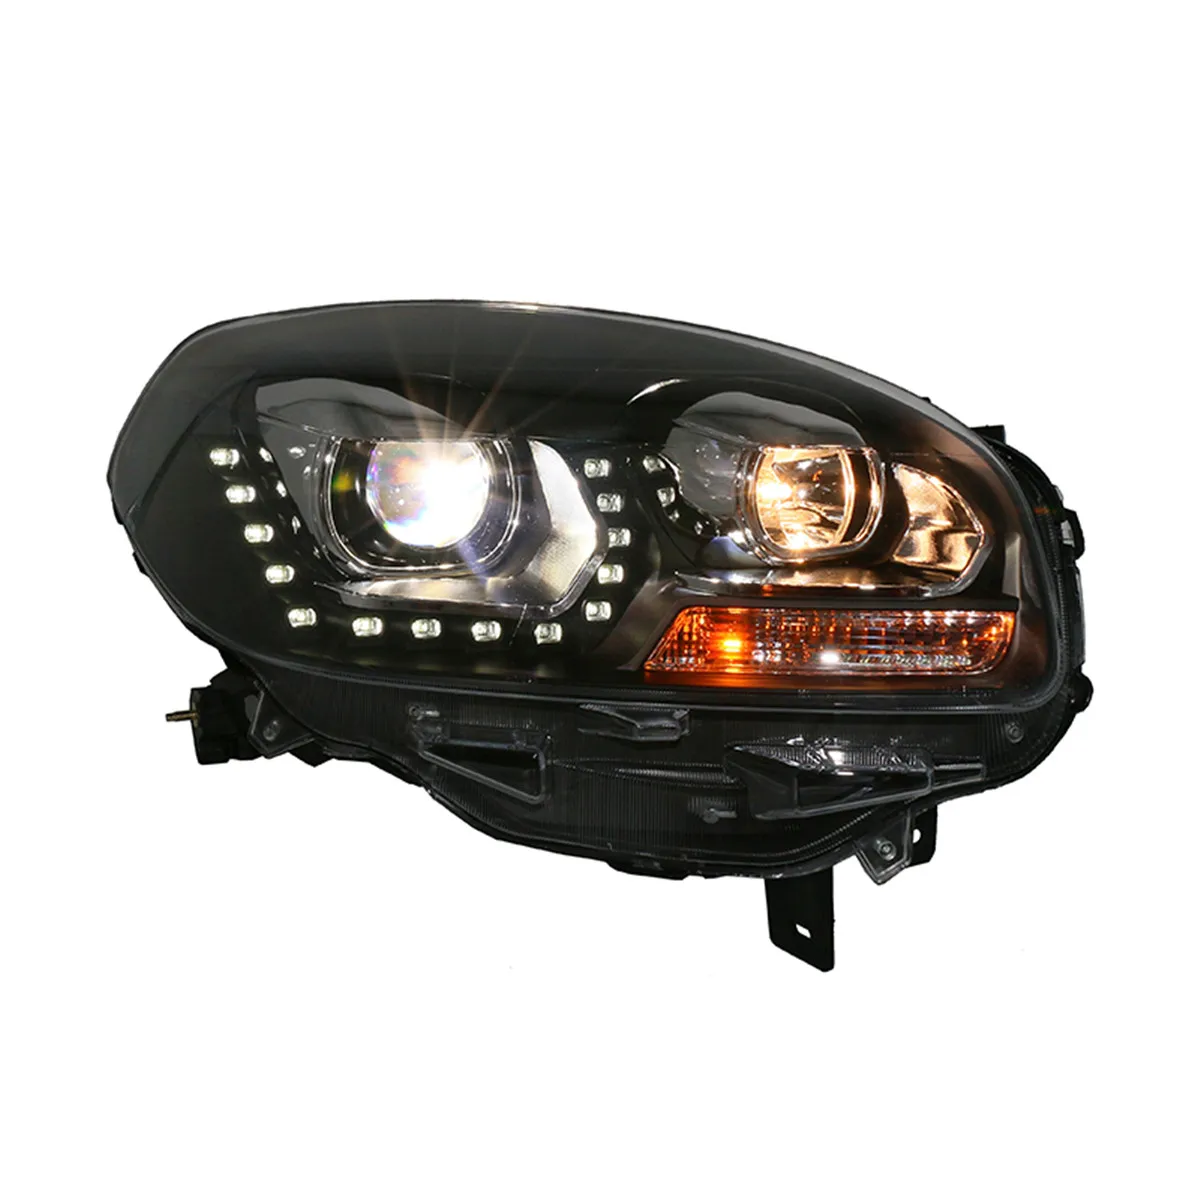 

Car LED Xenon lamp Headlight Angel eyes DRL Daytime Running Light With Turn Signal for Renault koleos